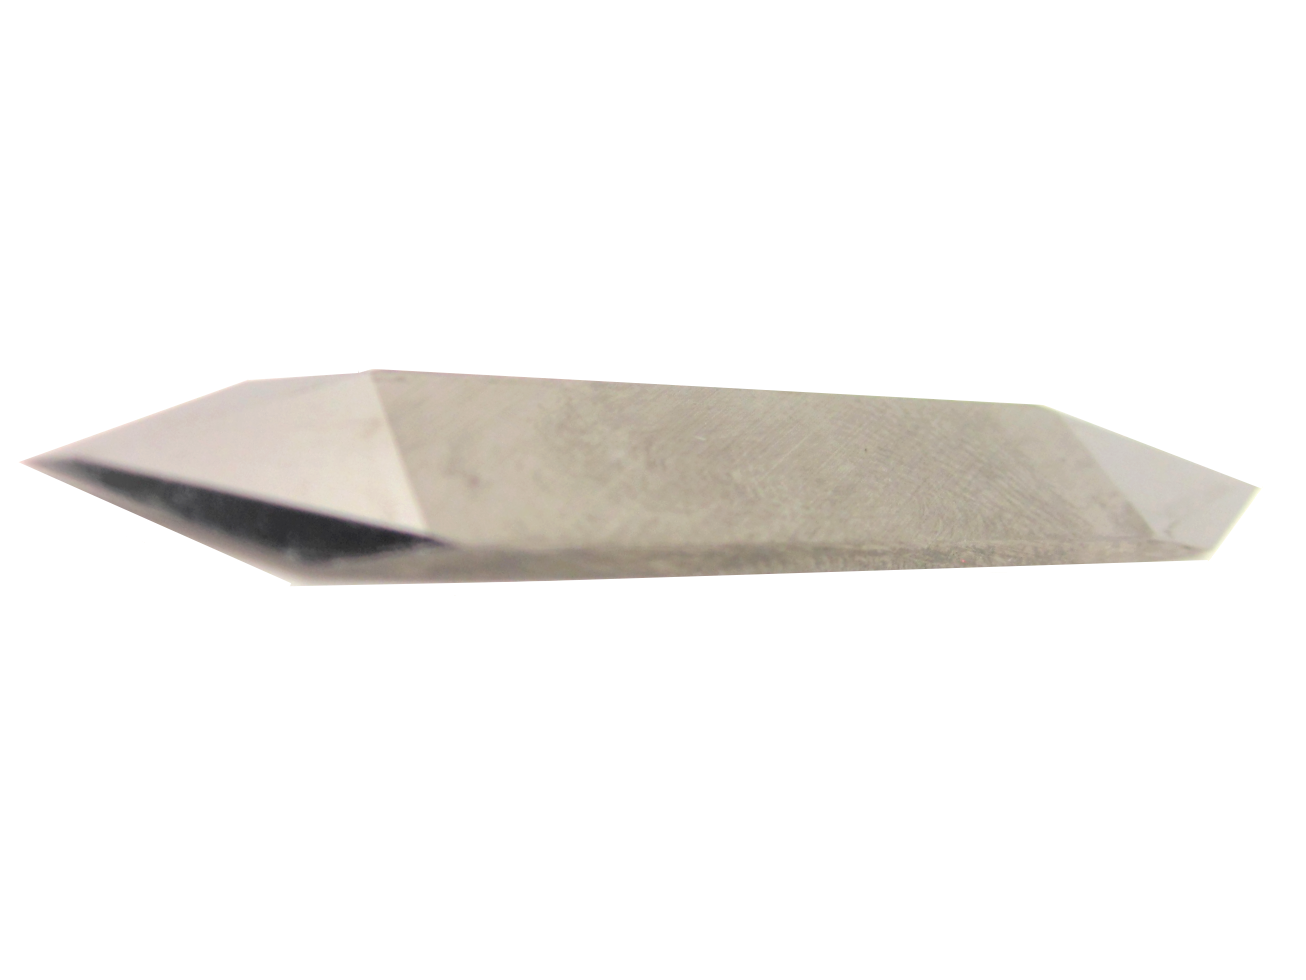 Blade type Esko Kongsberg BLD-DF213